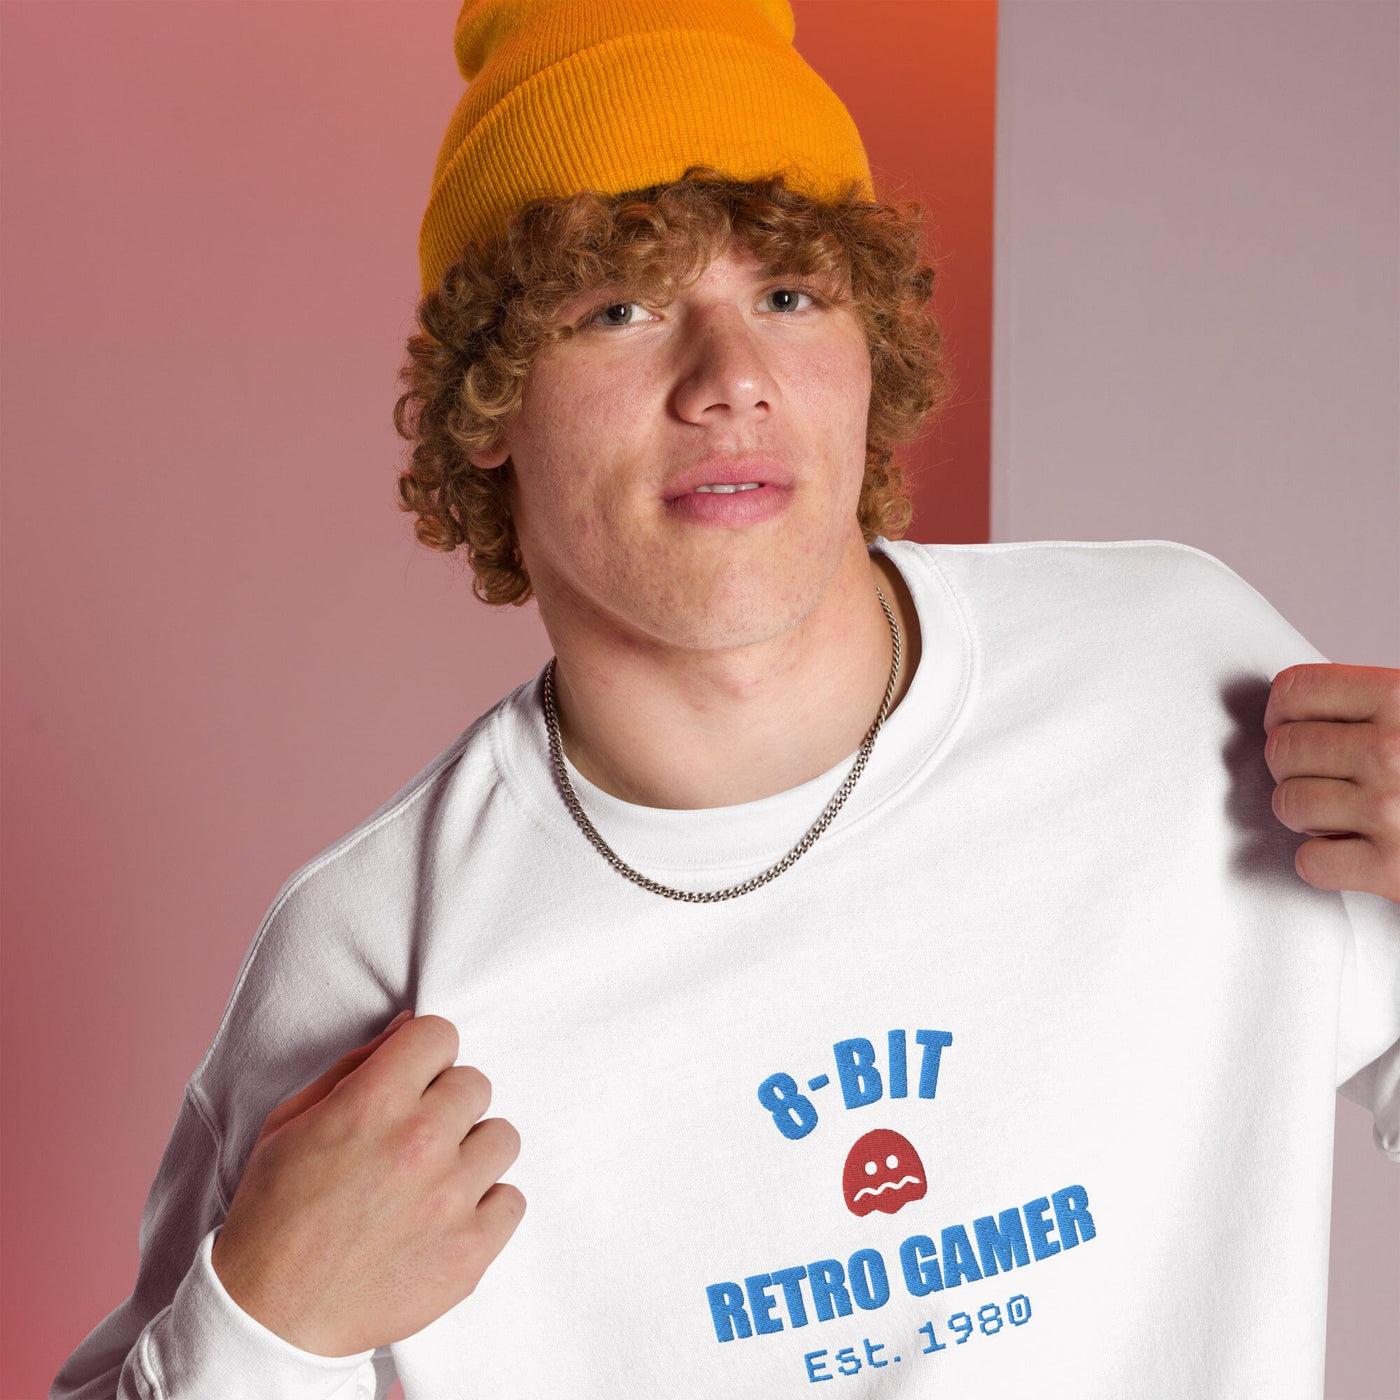 8-Bit Retro Gamer | Embroidered Unisex Sweatshirt | Retro Gaming Threads & Thistles Inventory 